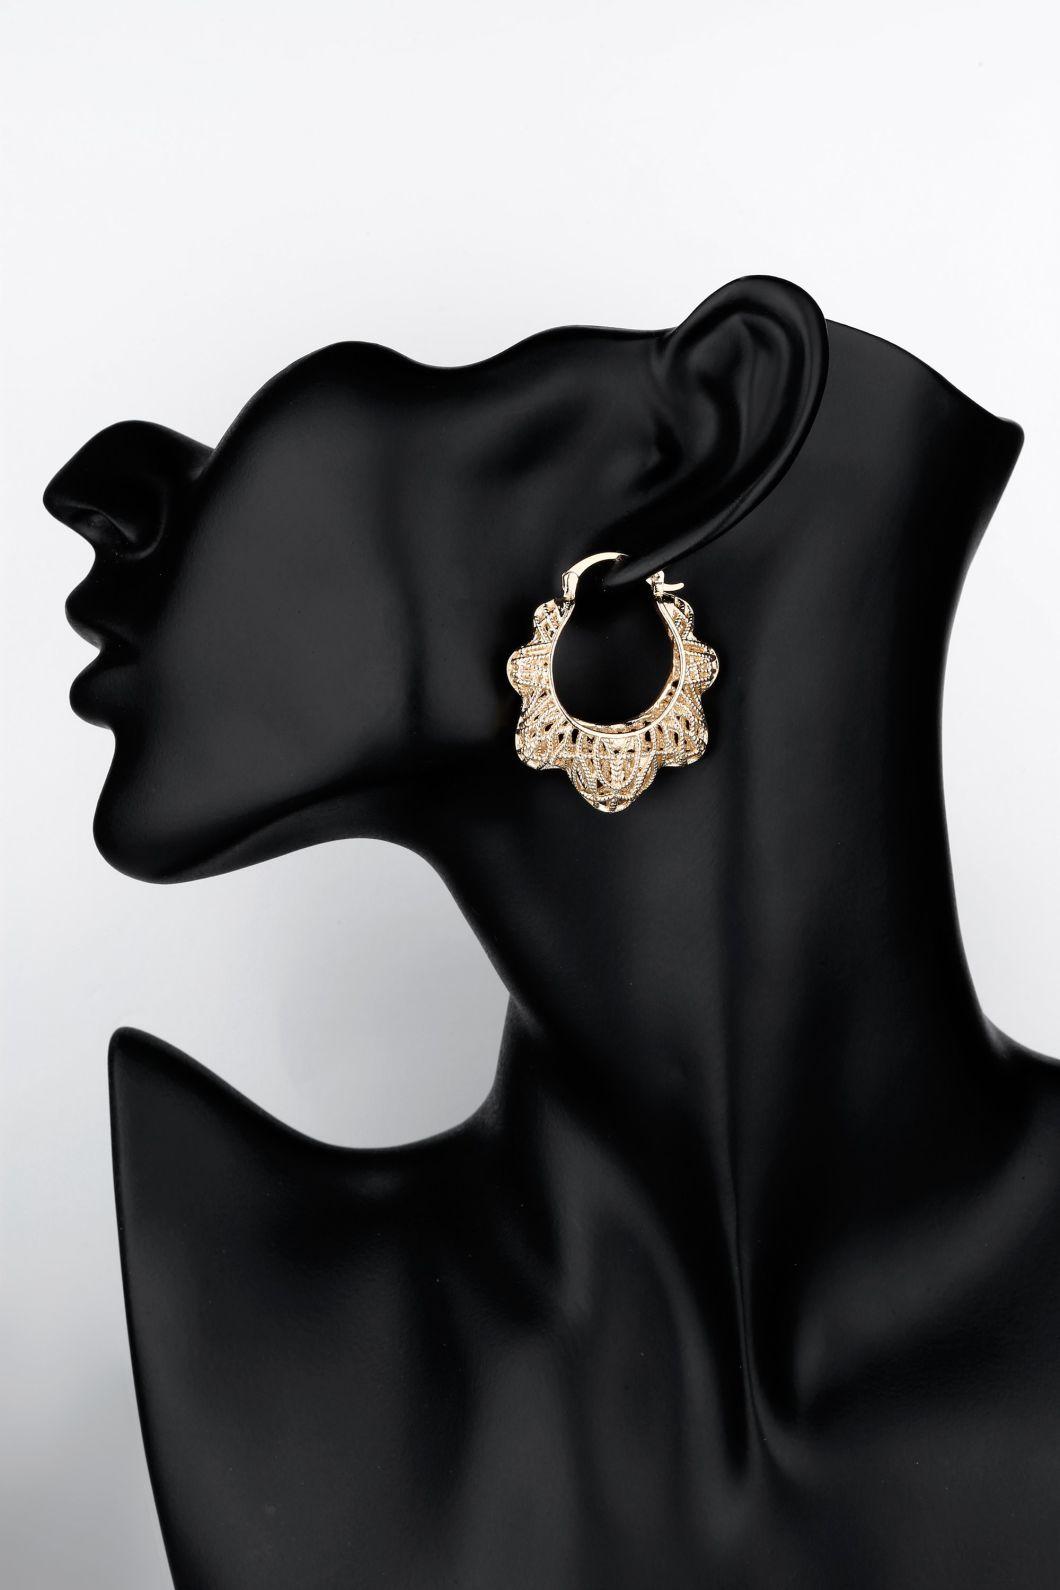 Factory Latest Design Girls 18K Gold Earring Fashion Hoop Earrings